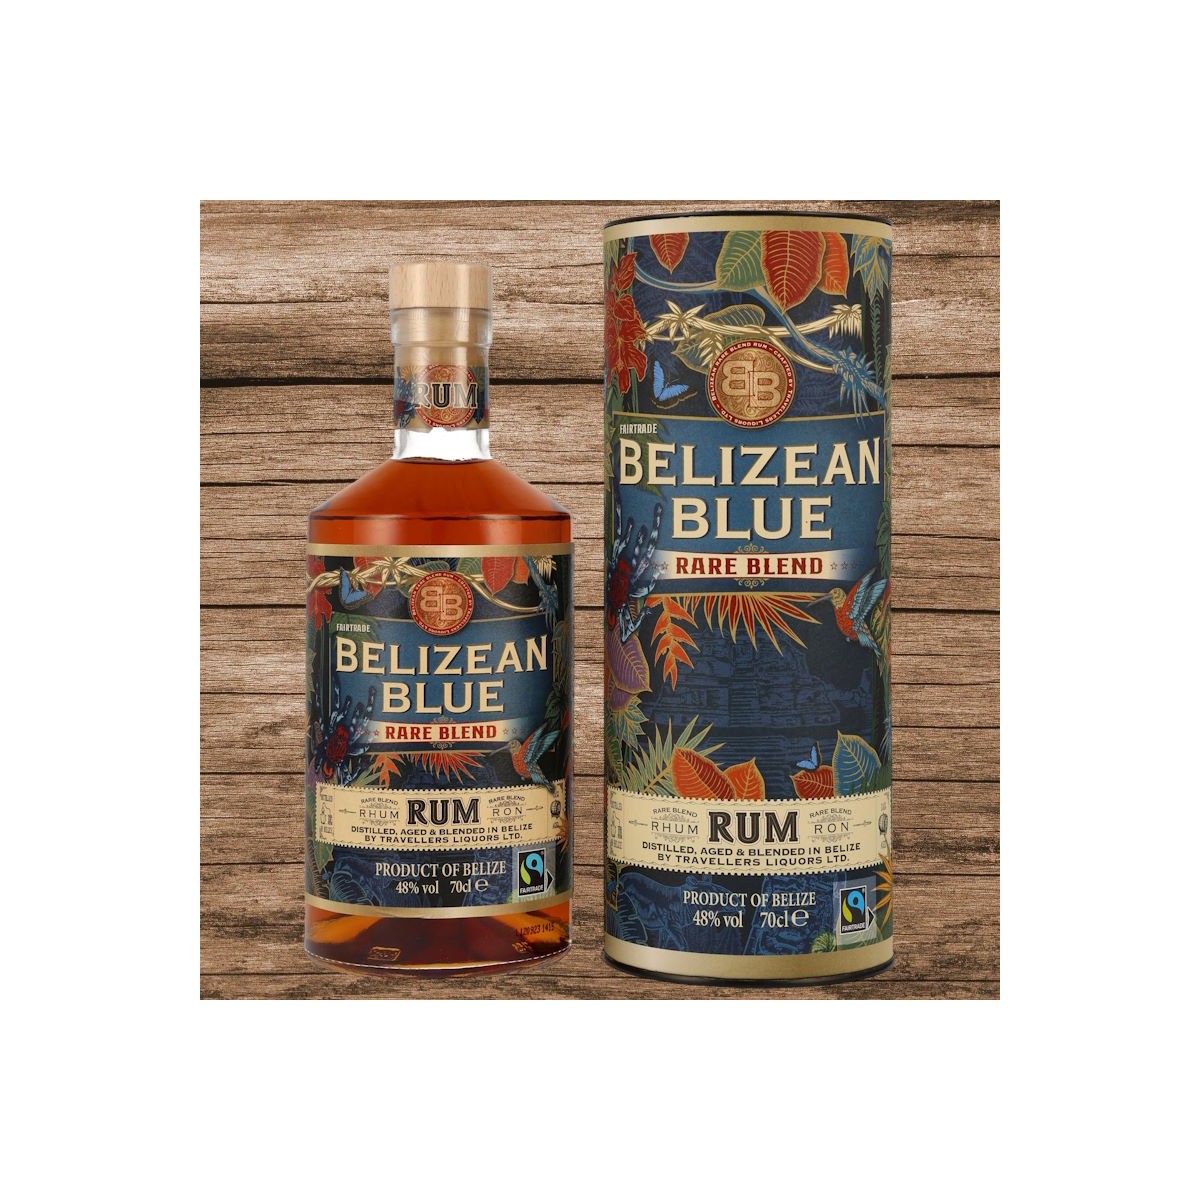 Belizean Blue Rare Blend Belize Rum 48% 0,7L